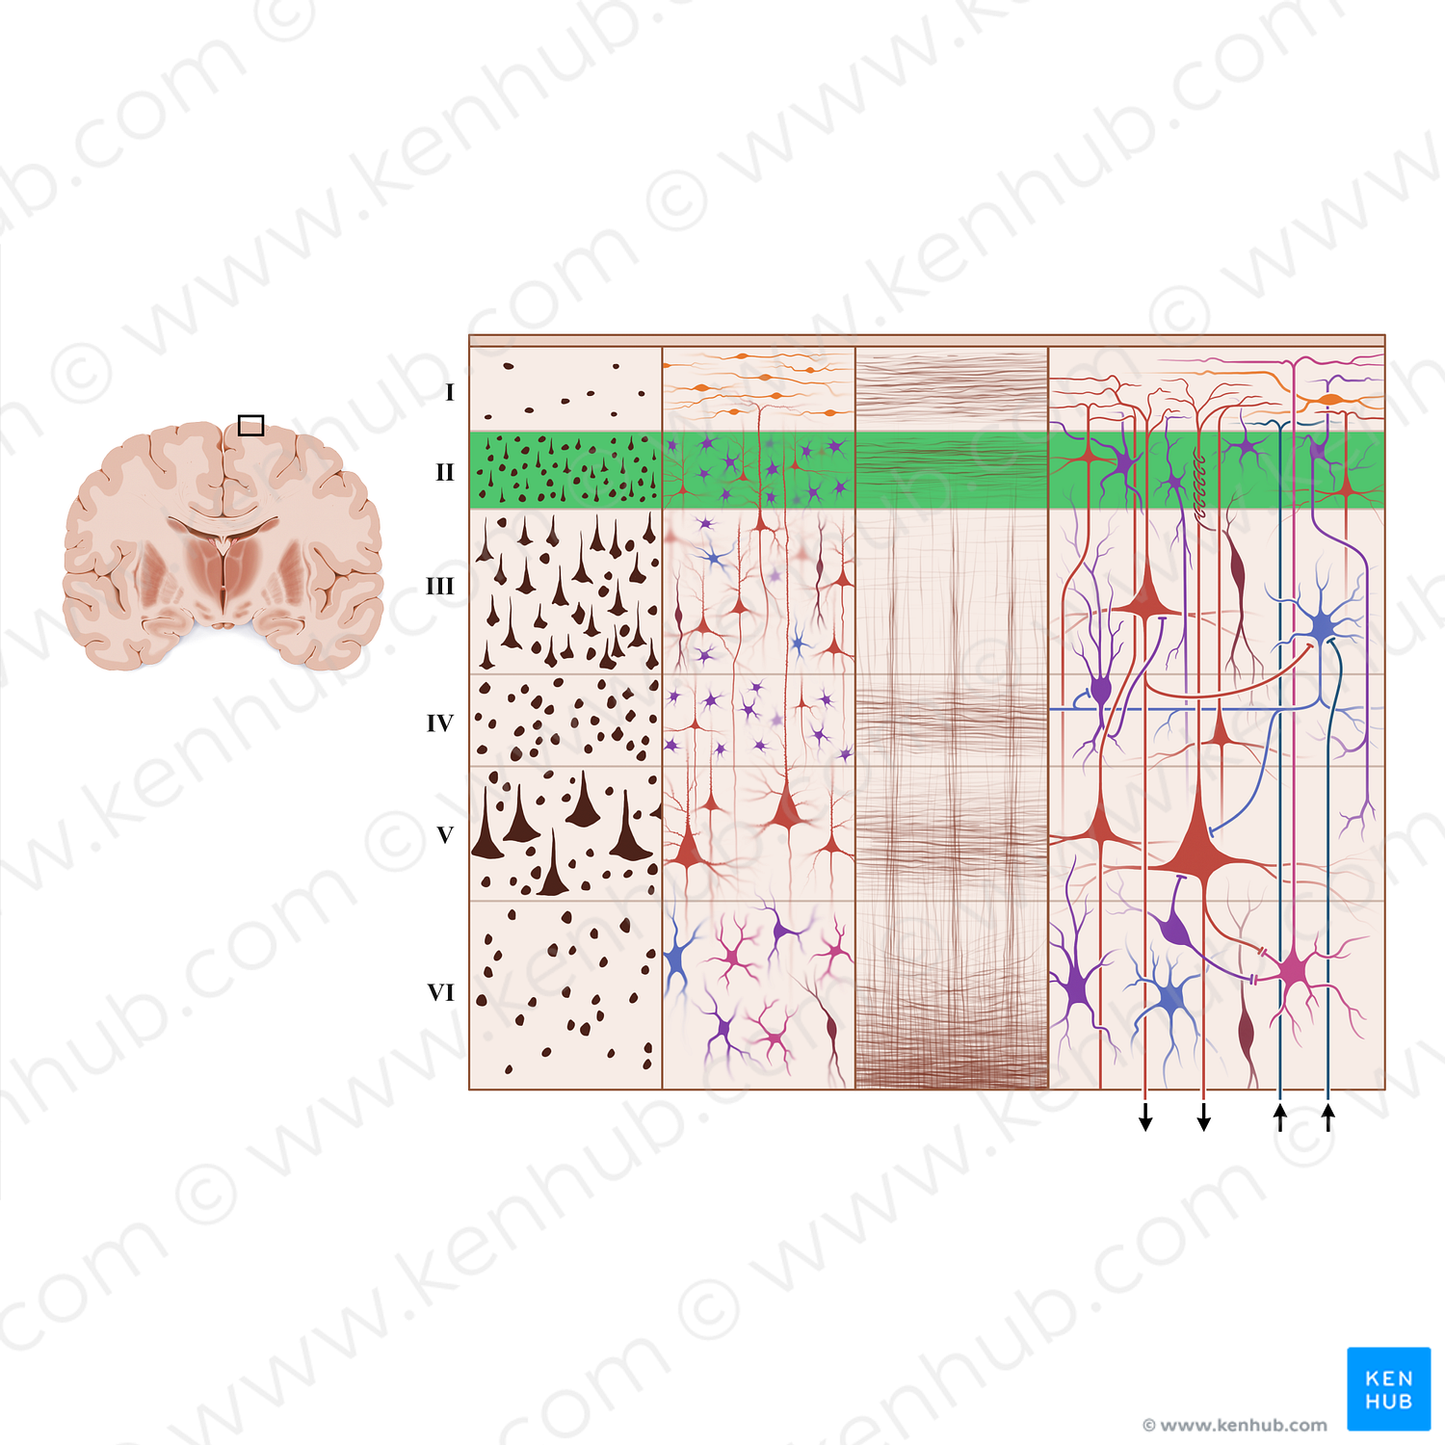 External granular layer of cerebral cortex (#18931)